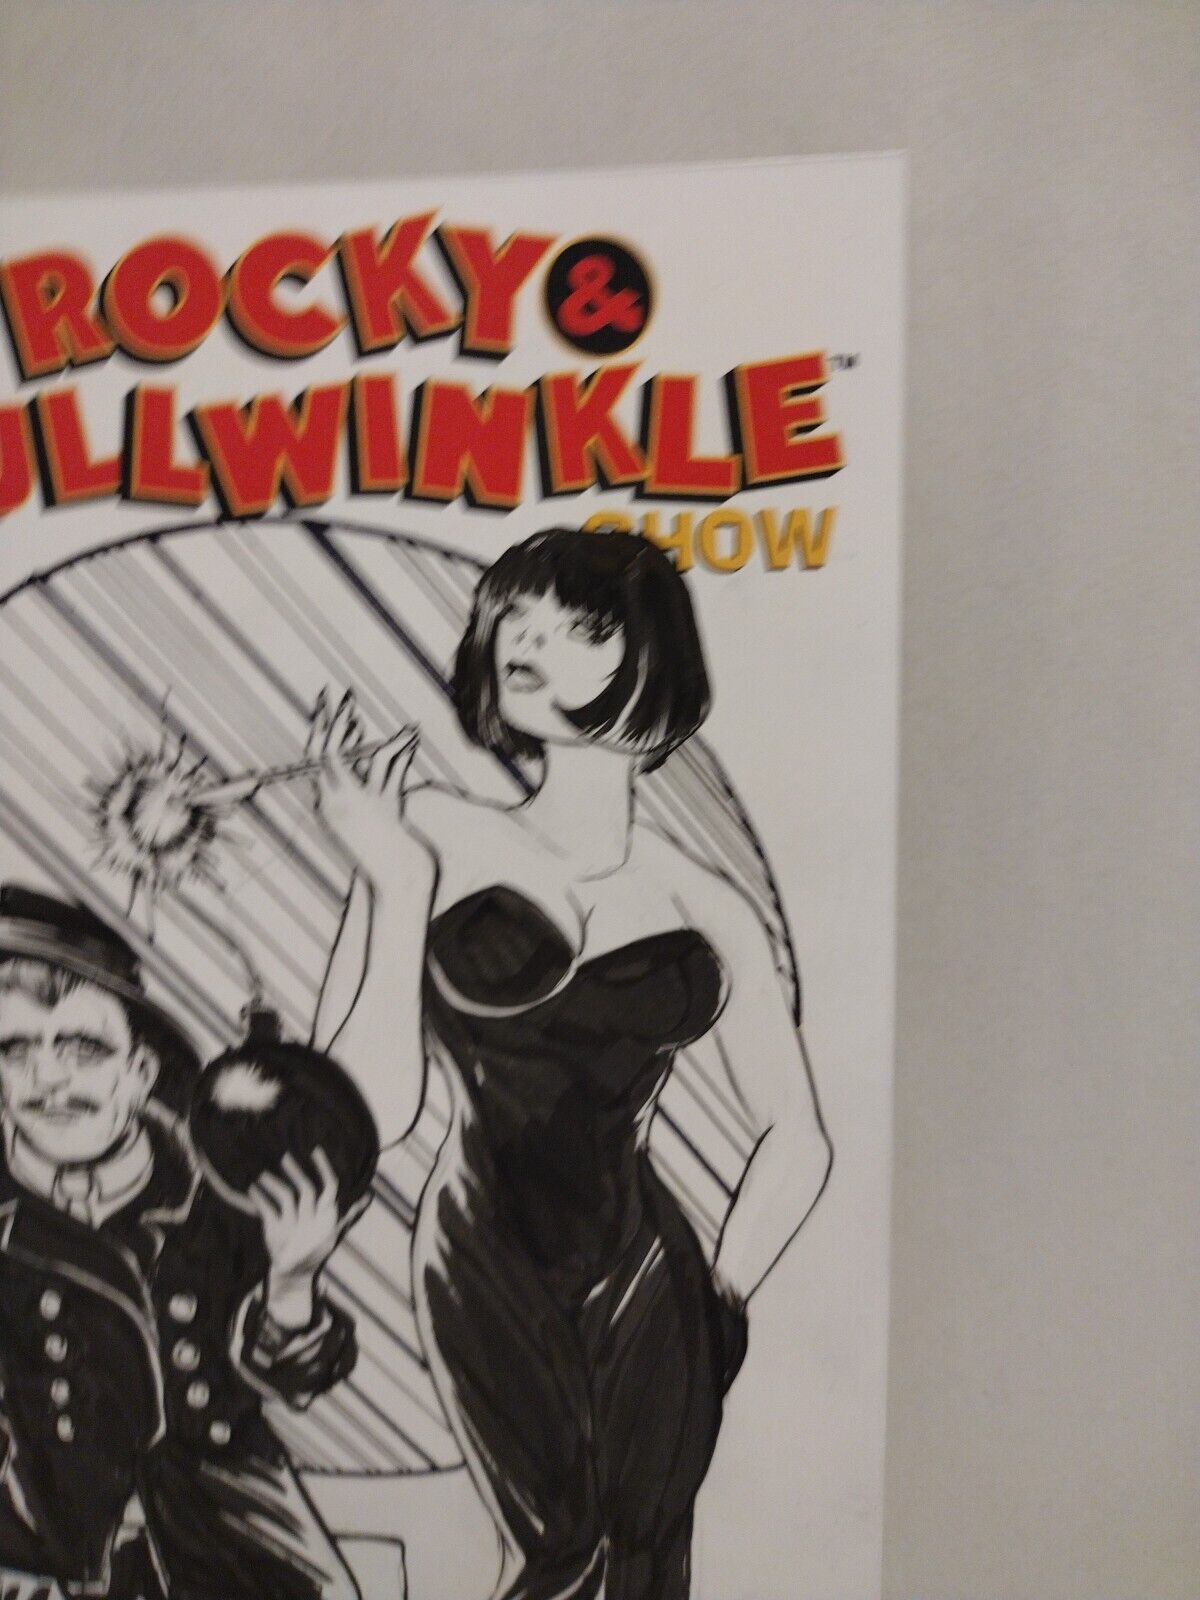 Rocky & Bullwinkle Show #1 (2017) Sketch Cover Comic W Original Dave Castr Art